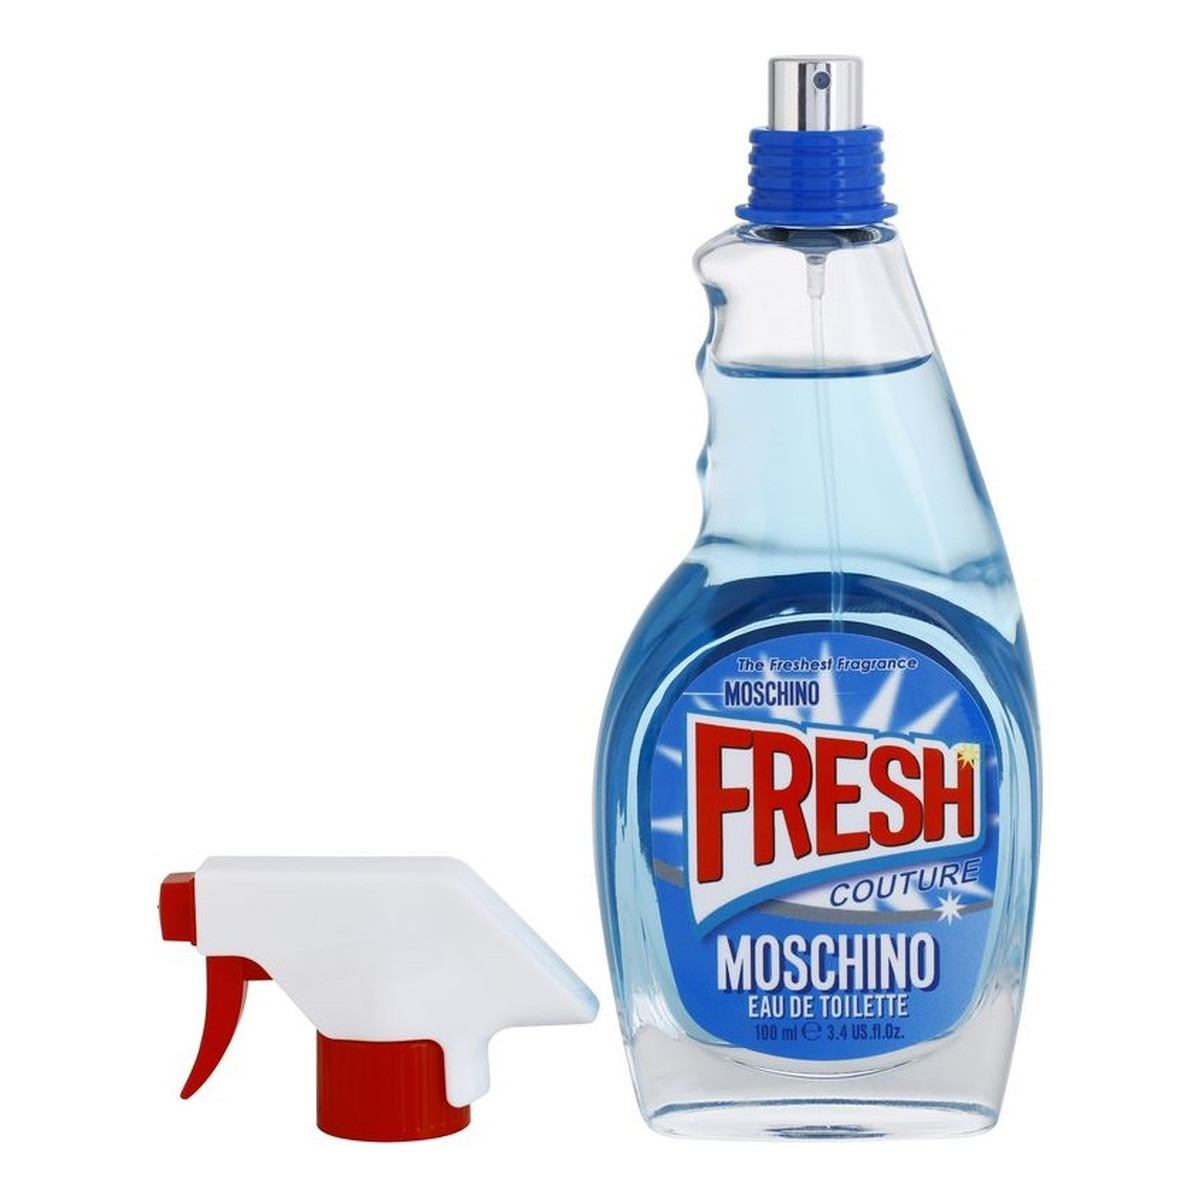 Moschino Fresh Couture Woda toaletowa dla kobiet TESTER 100ml